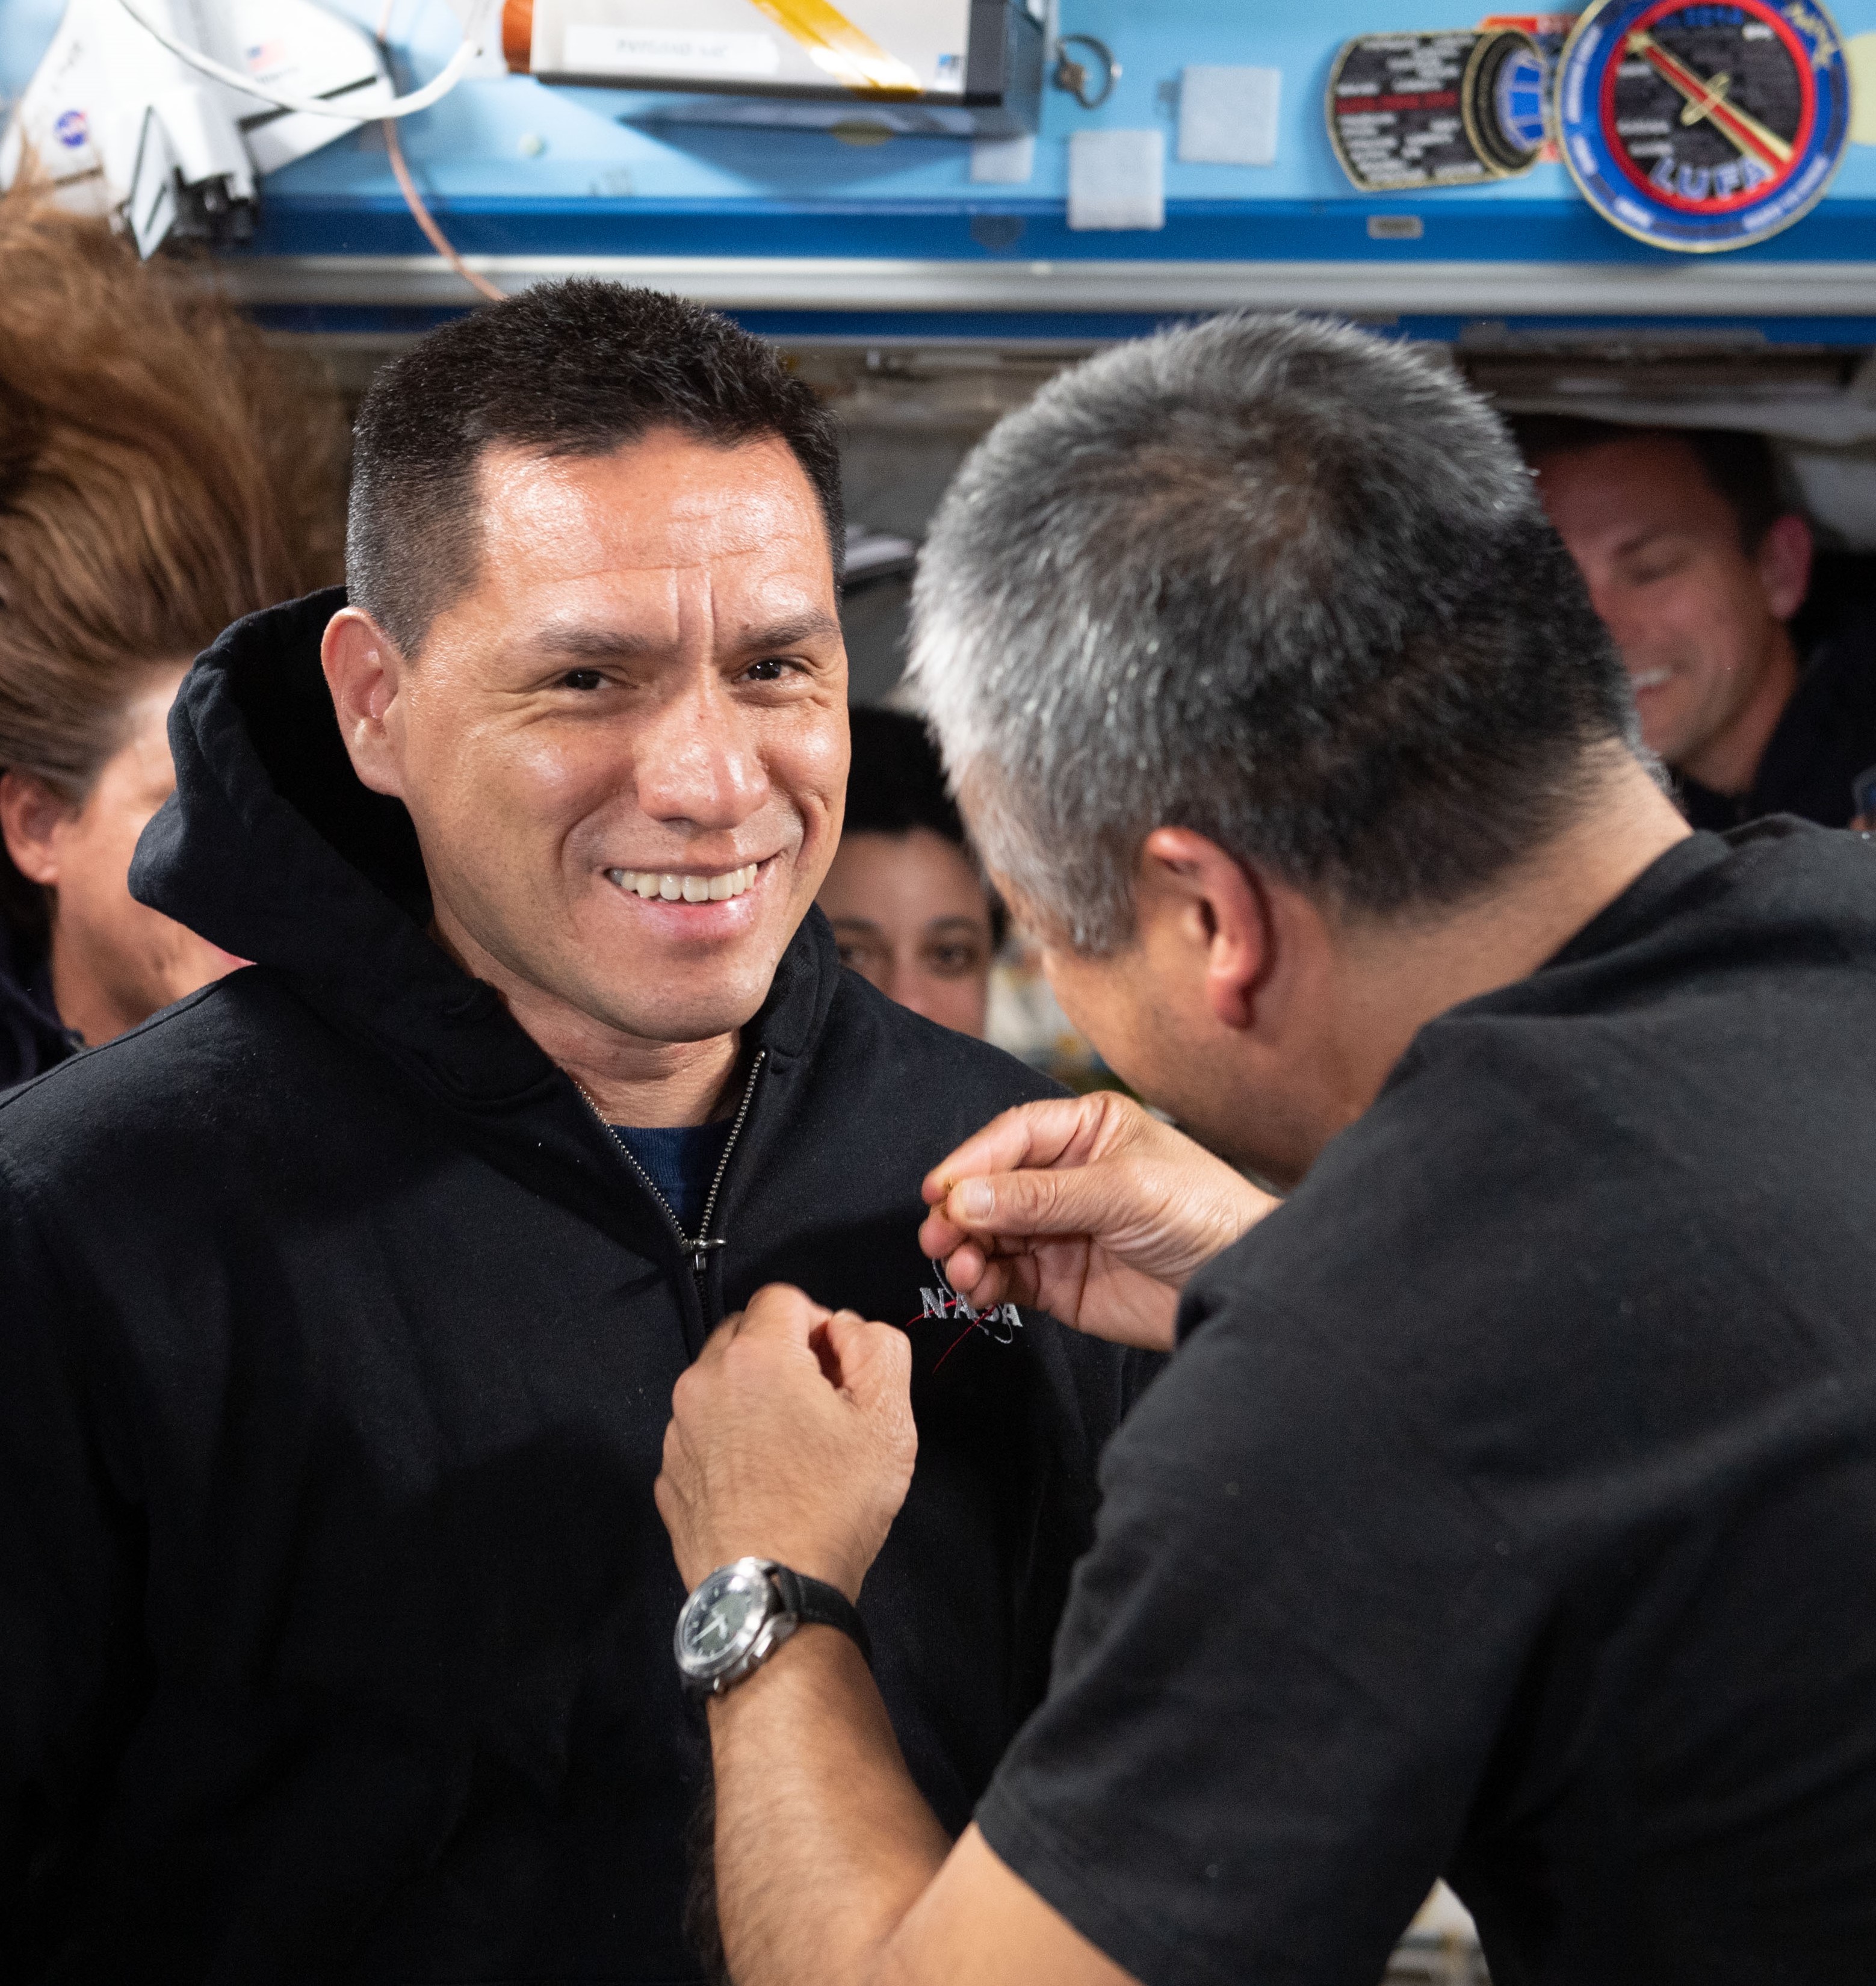 NASA astronaut Francisco “Frank” C. Rubio receives his gold astronaut pin from Japan Aerospace Exploration Agency astronaut and fellow Expedition 68 crew member Koichi Wakata